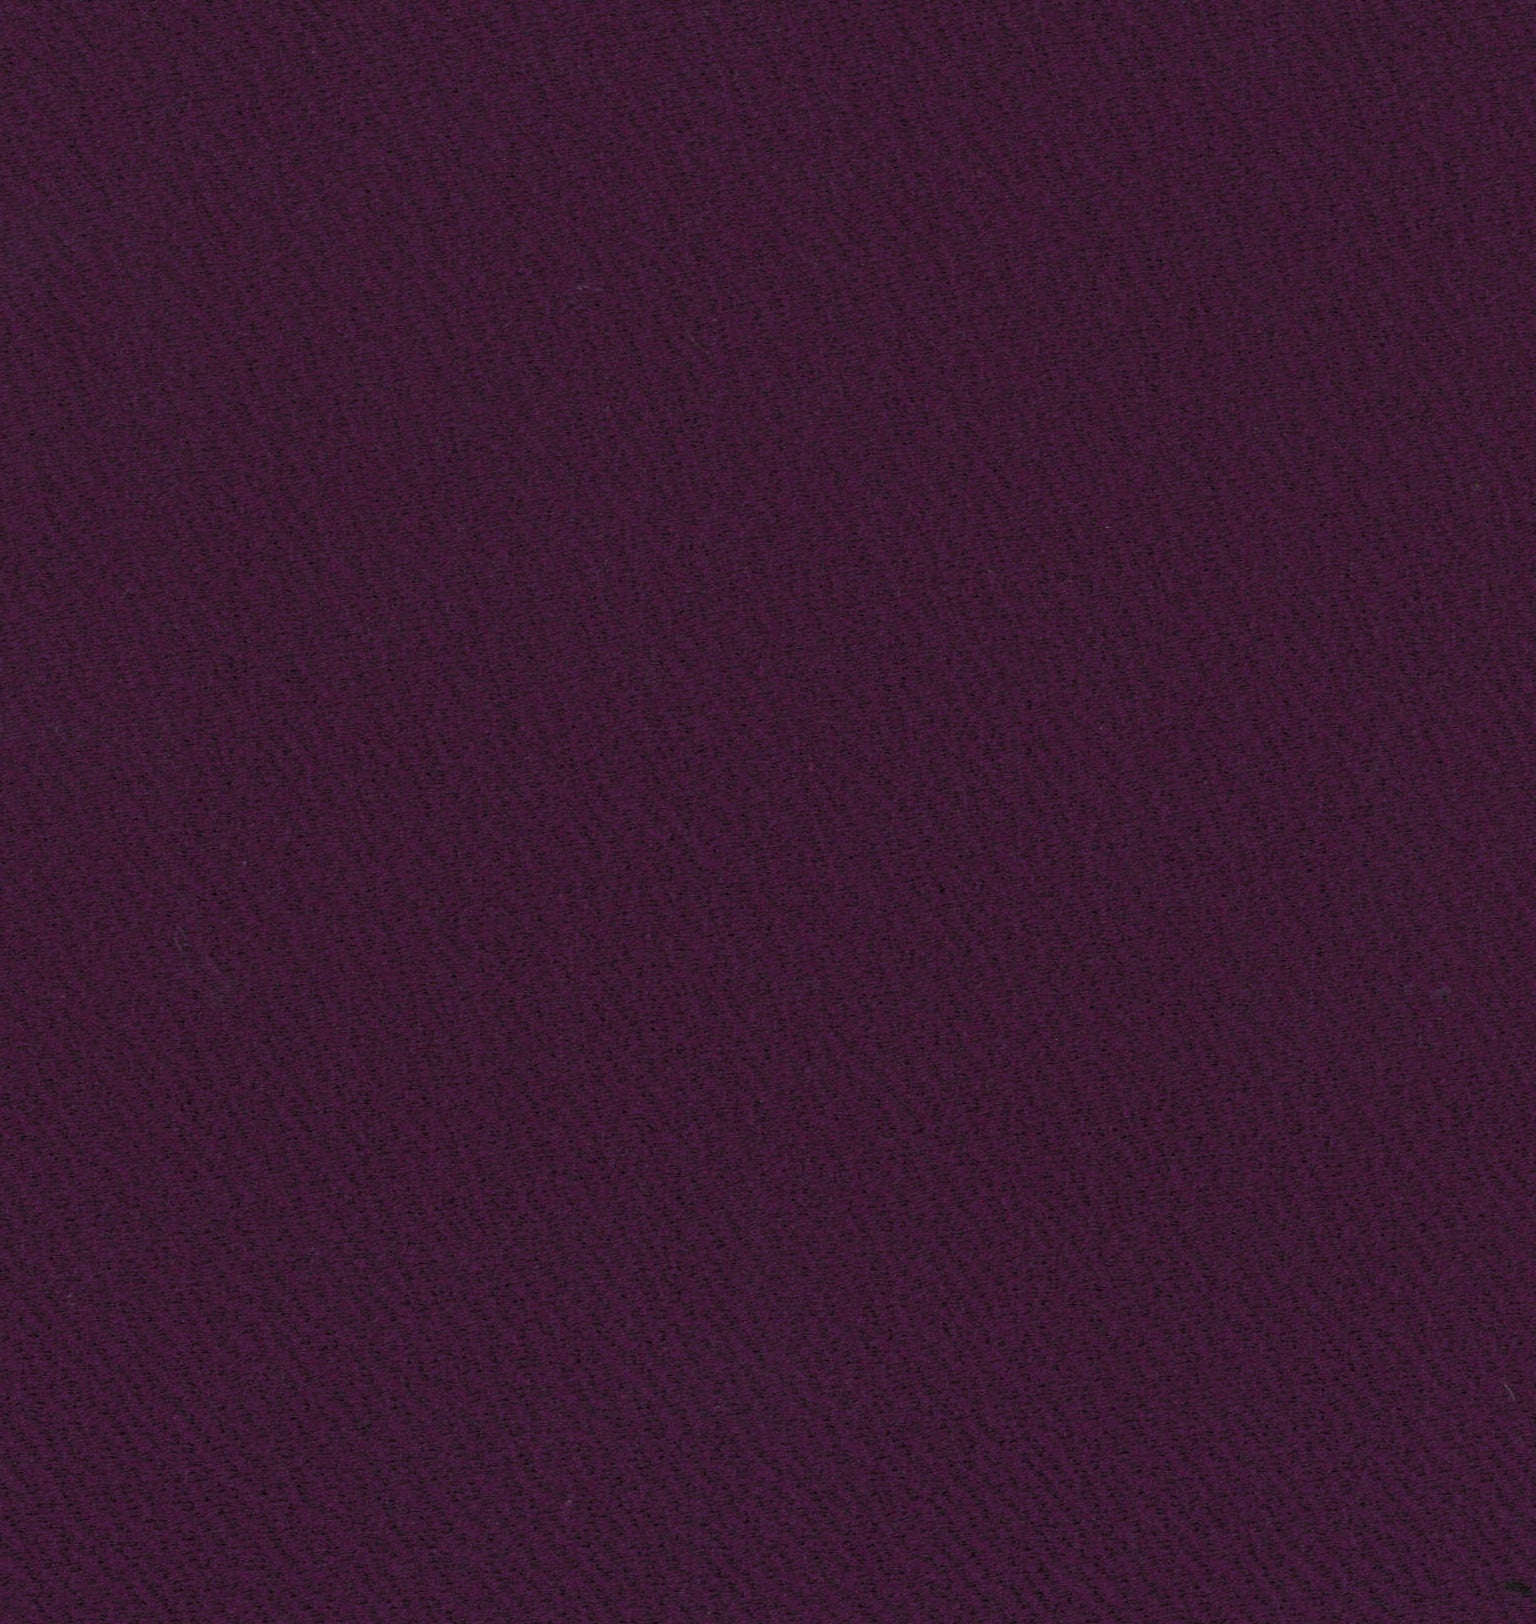 13018-11 Dark Purple Riverpool Jacquard Plain Dyed Blend 260g/yd 58&quot; blend jacquard knit plain dyed polyester purple spandex Solid Color, Jacquard - knit fabric - woven fabric - fabric company - fabric wholesale - fabric b2b - fabric factory - high quality fabric - hong kong fabric - fabric hk - acetate fabric - cotton fabric - linen fabric - metallic fabric - nylon fabric - polyester fabric - spandex fabric - chun wing hing - cwh hk - fabric worldwide ship - 針織布 - 梳織布 - 布料公司- 布料批發 - 香港布料 - 秦榮興